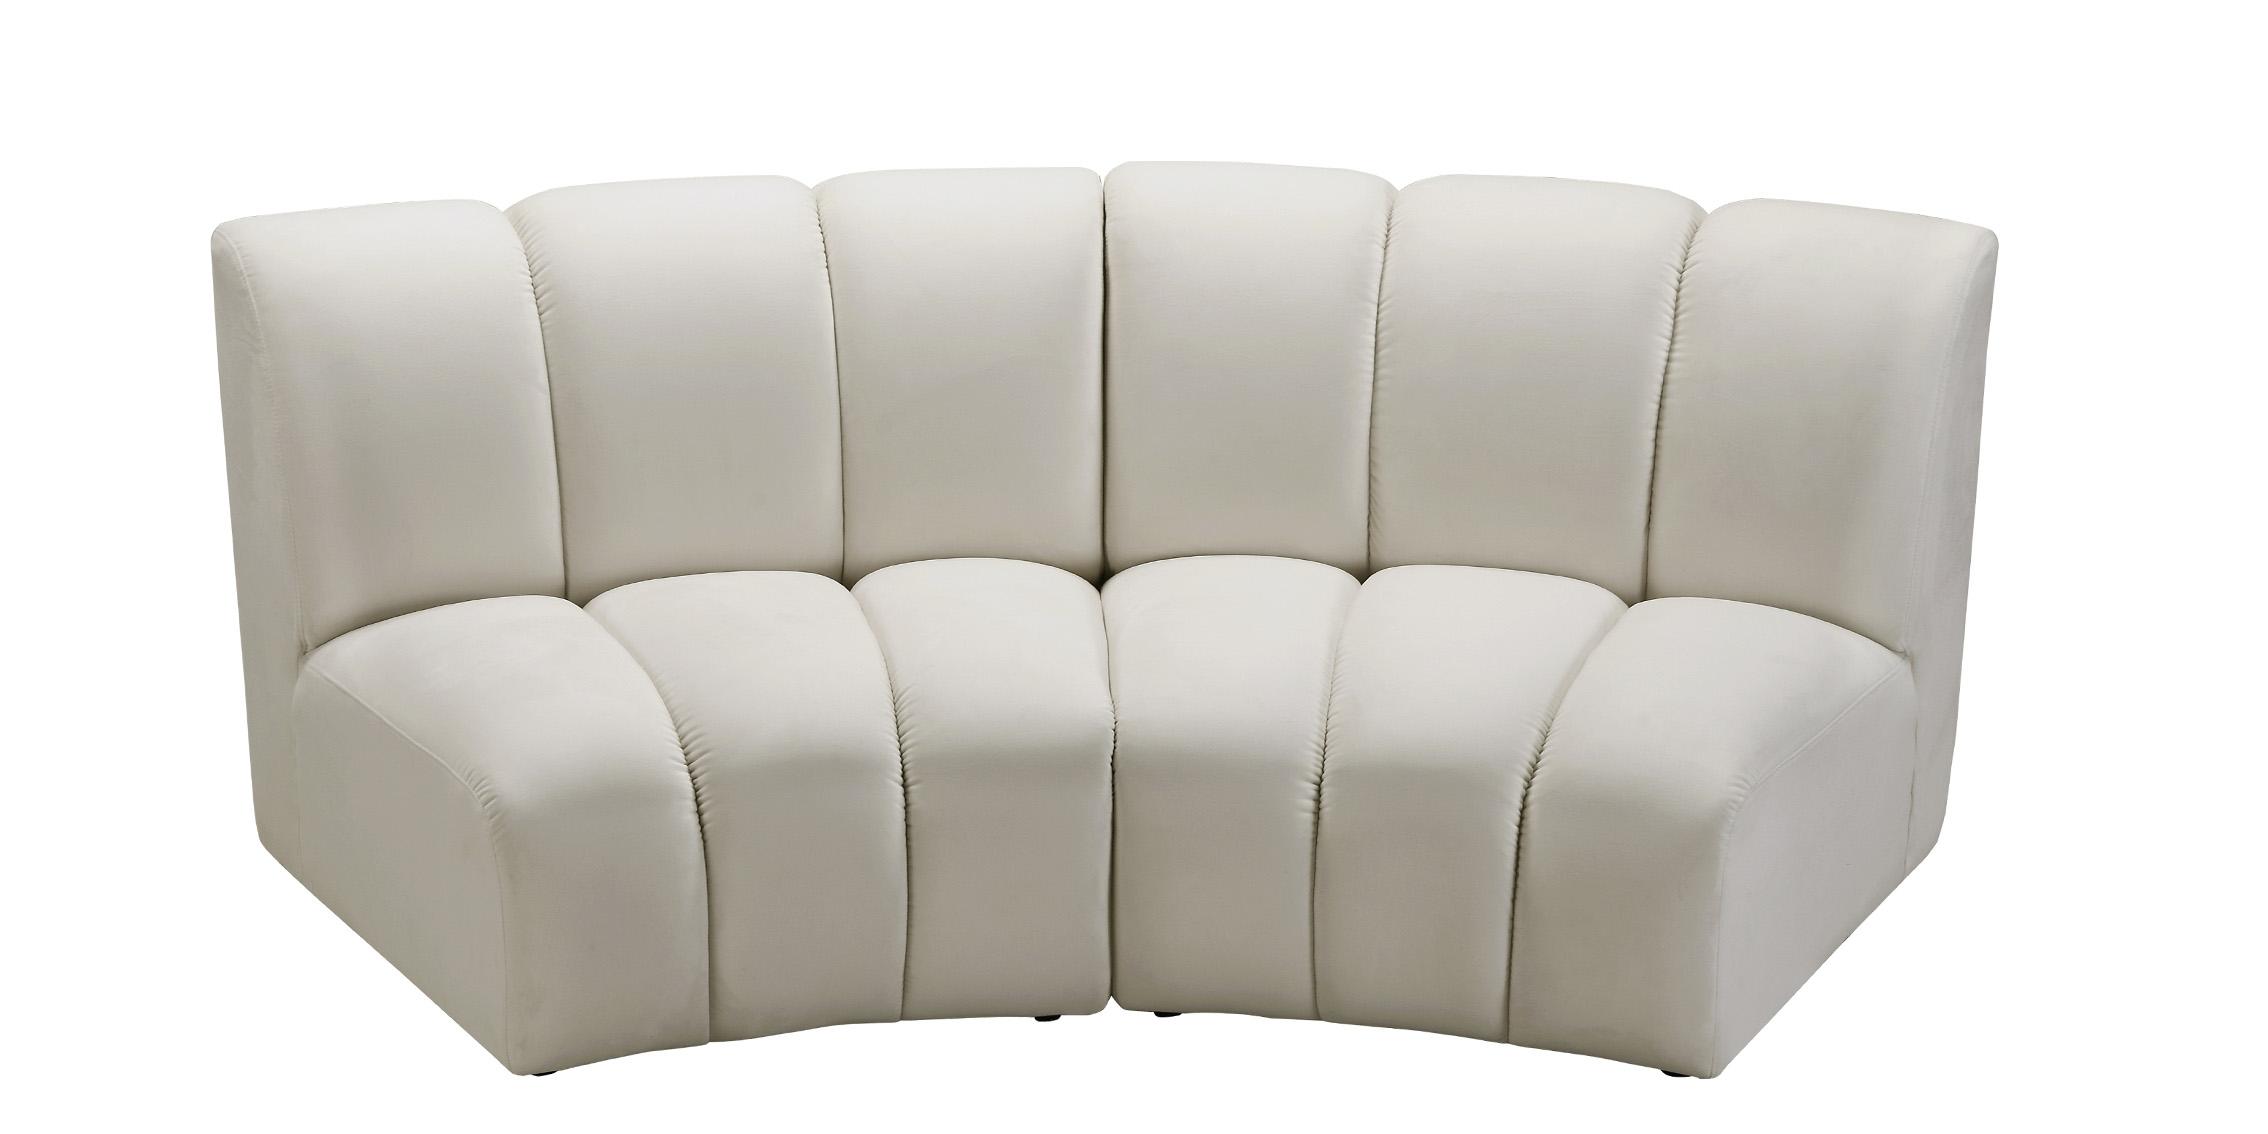 Contemporary, Modern Modular Sectional Sofa INFINITY 638Cream-2PC 638Cream-2PC in Cream Velvet